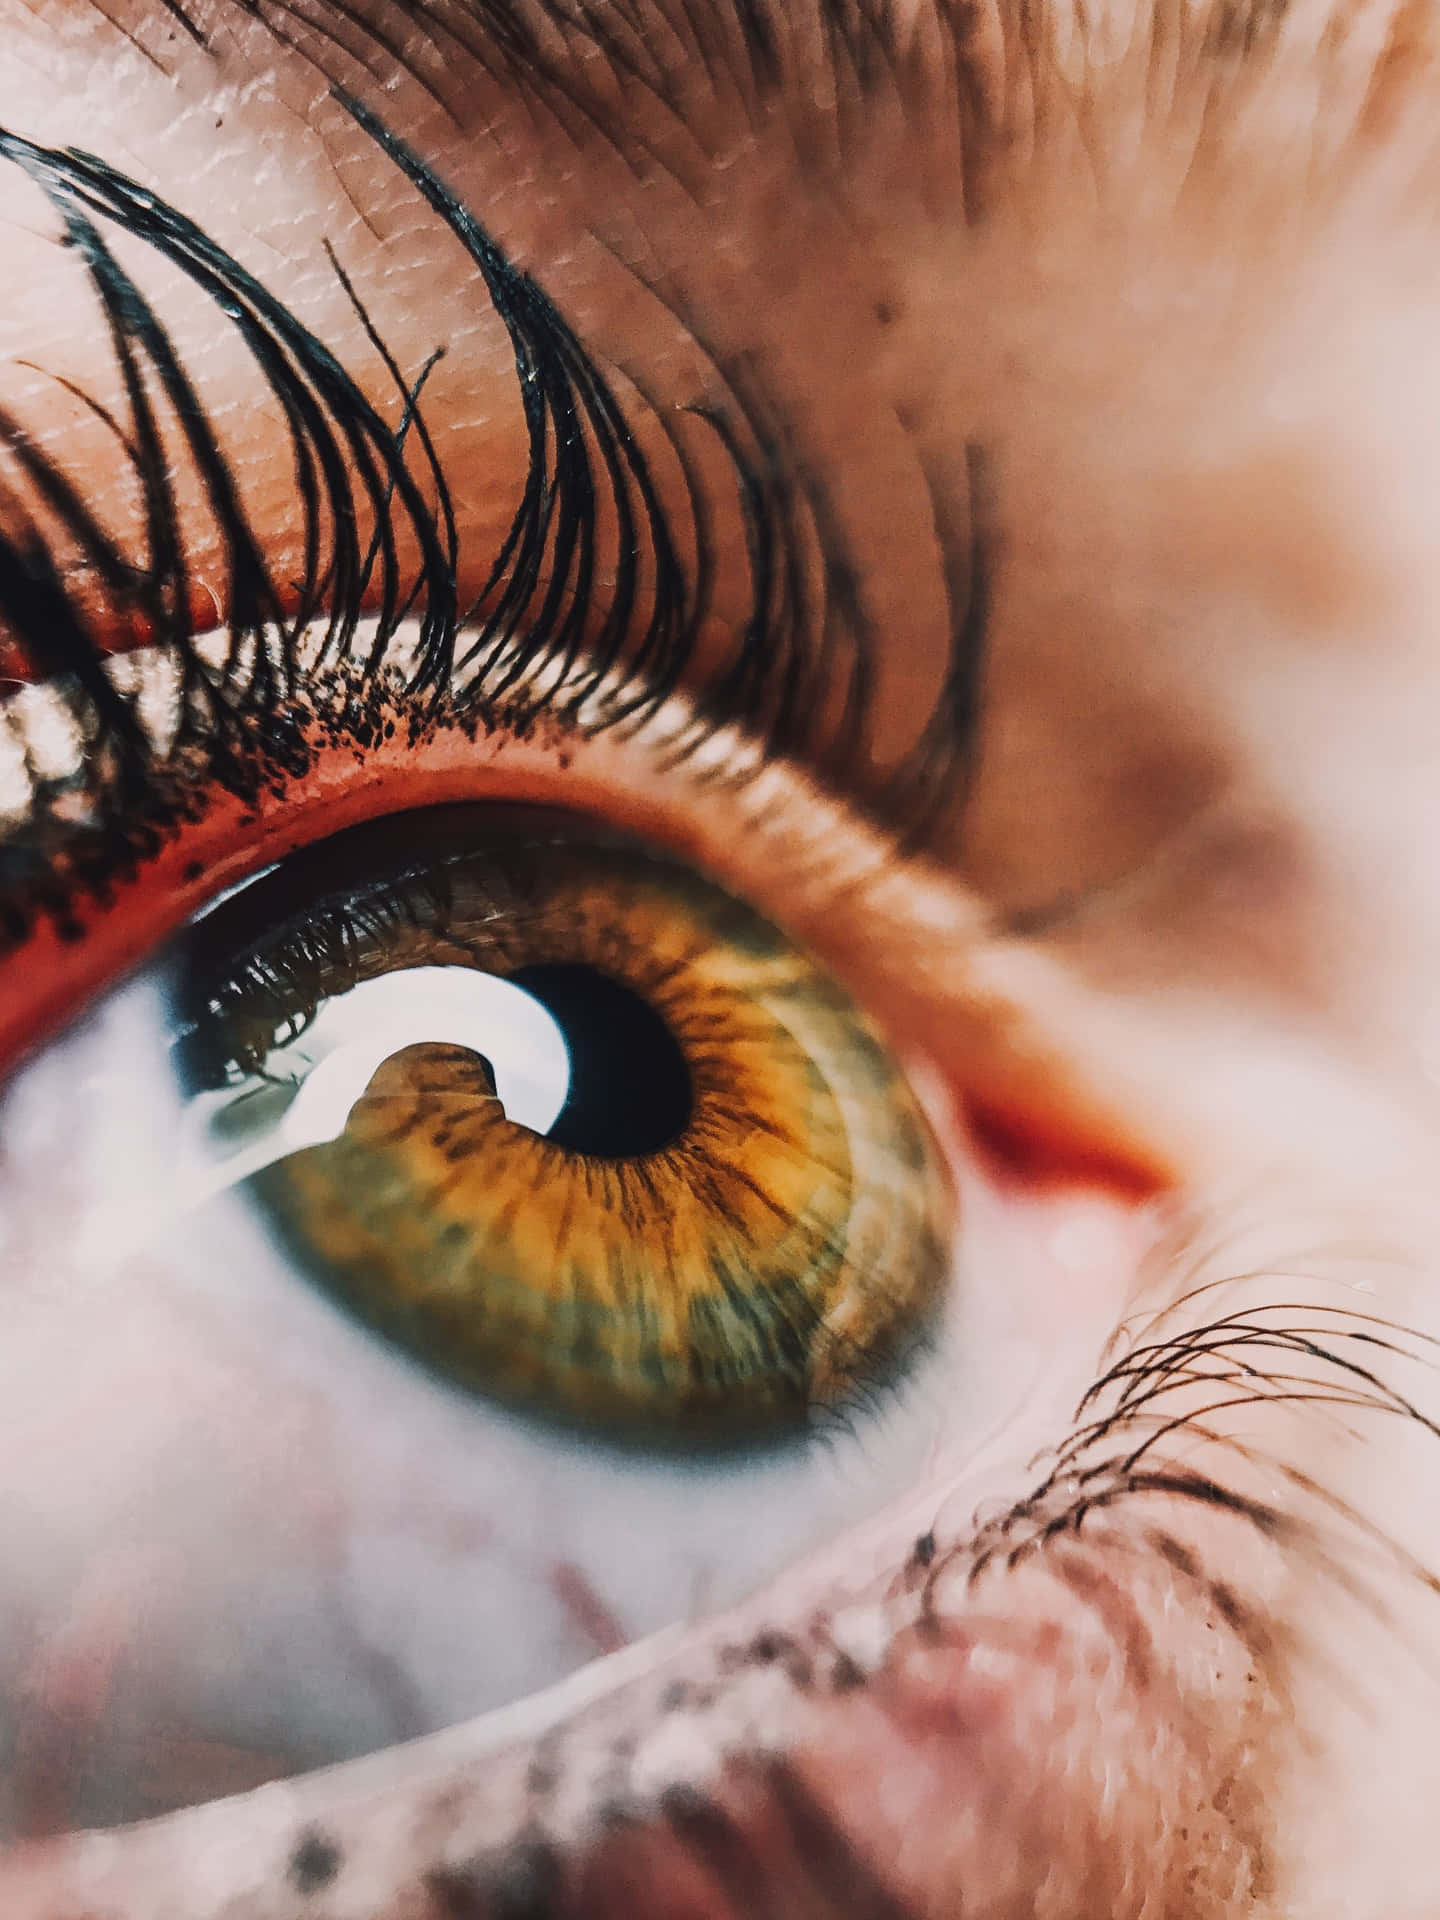 Captivating Sharp Gaze: Close-Up of a Stuning Human Eye